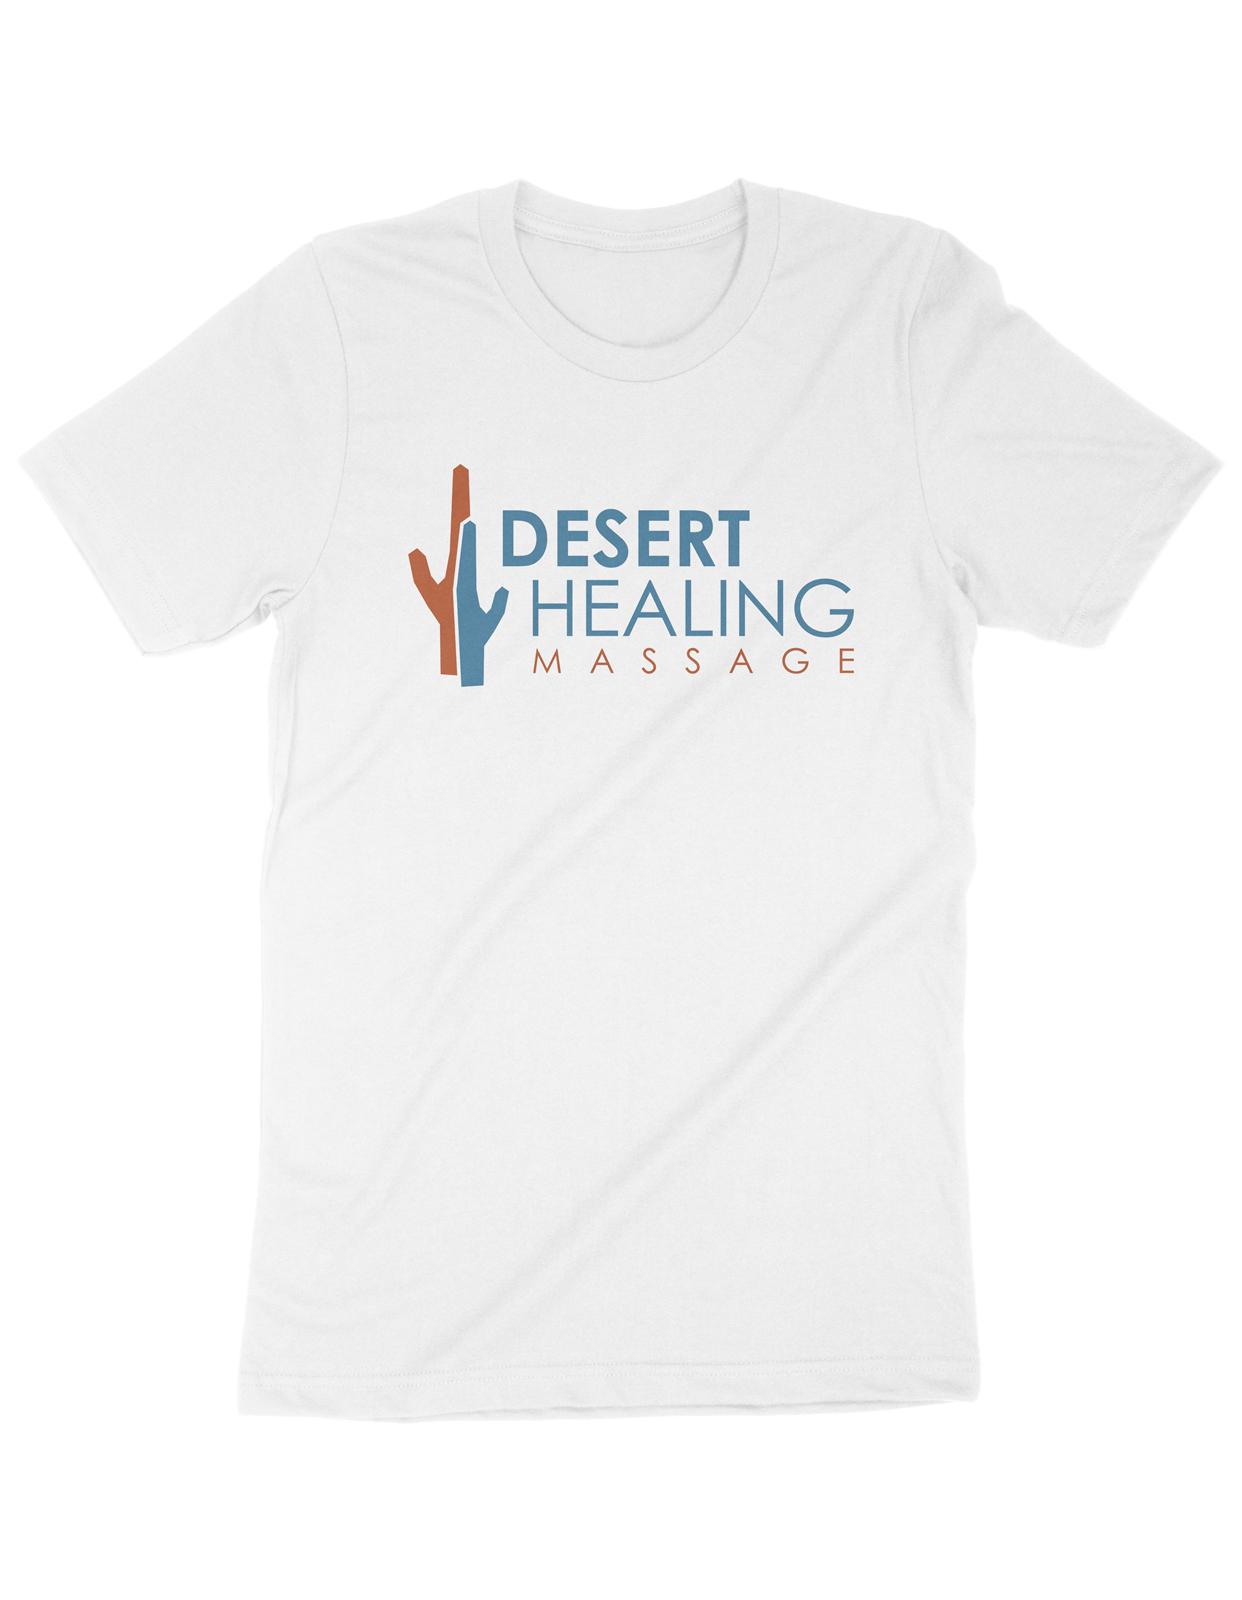 /img/stores/desert-healing-massage.png